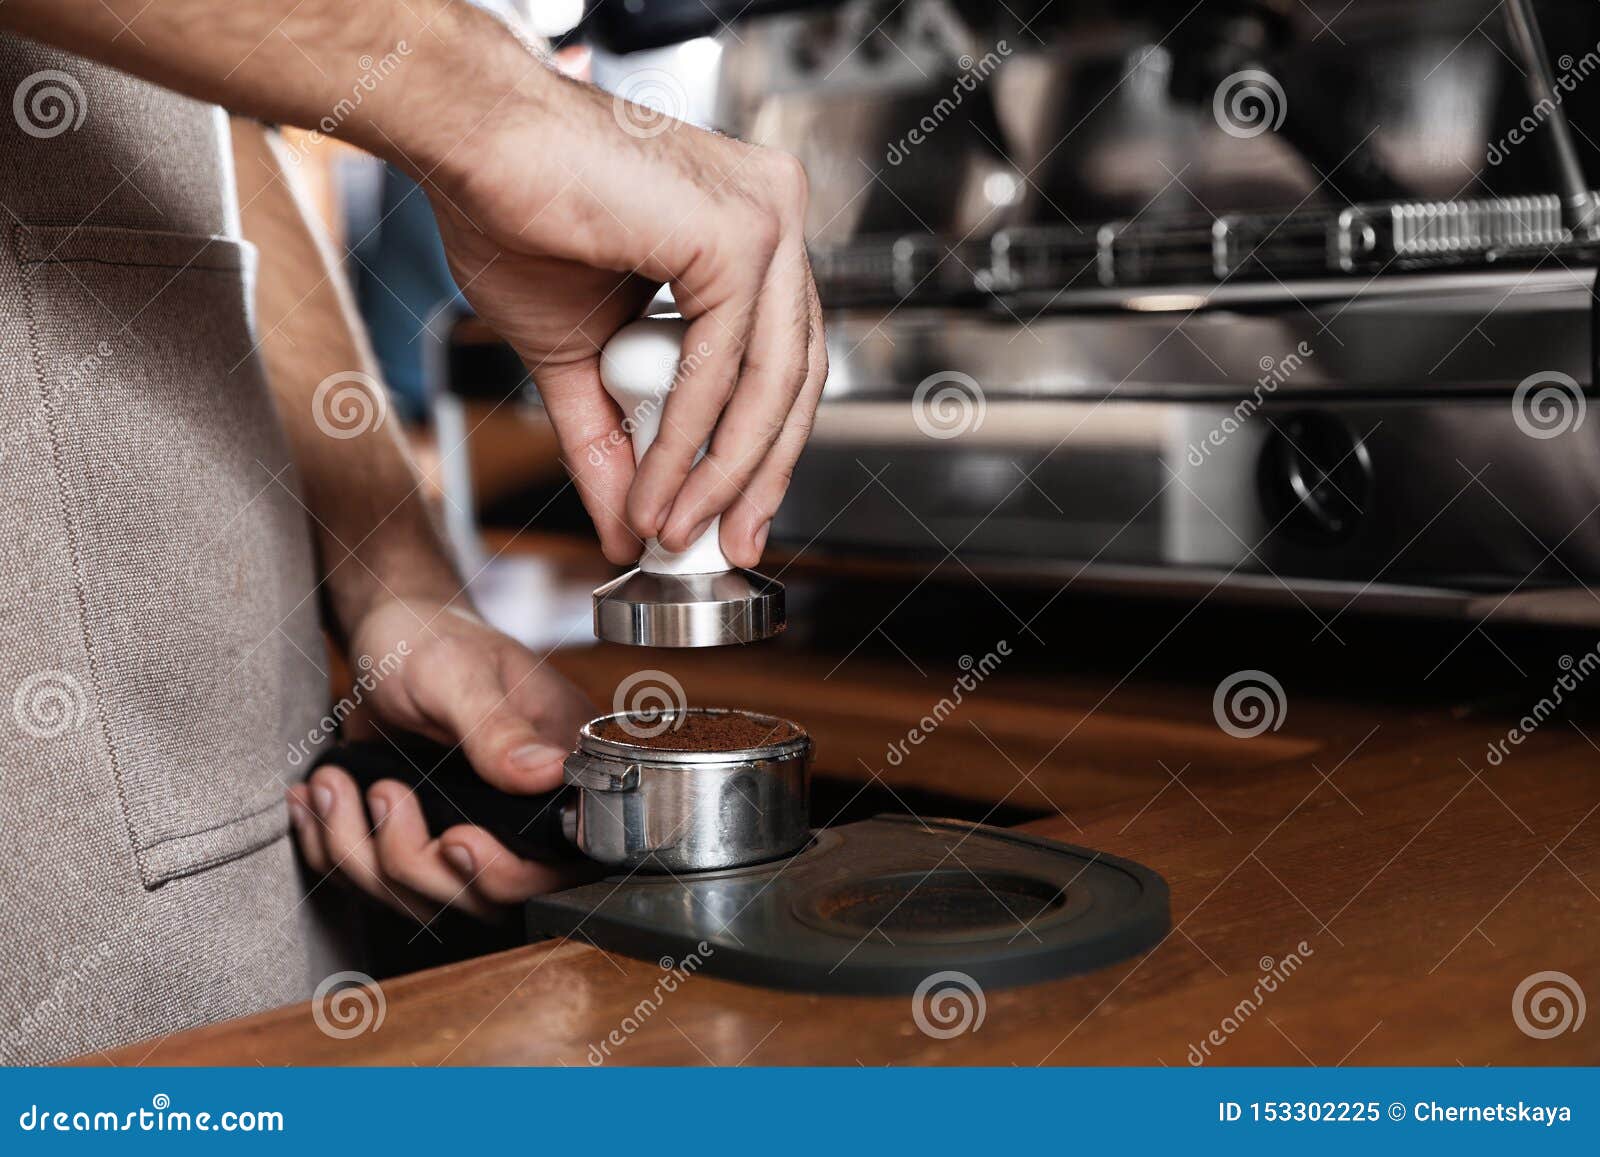 barista tamping milled coffee in portafilter at bar counter, closeup